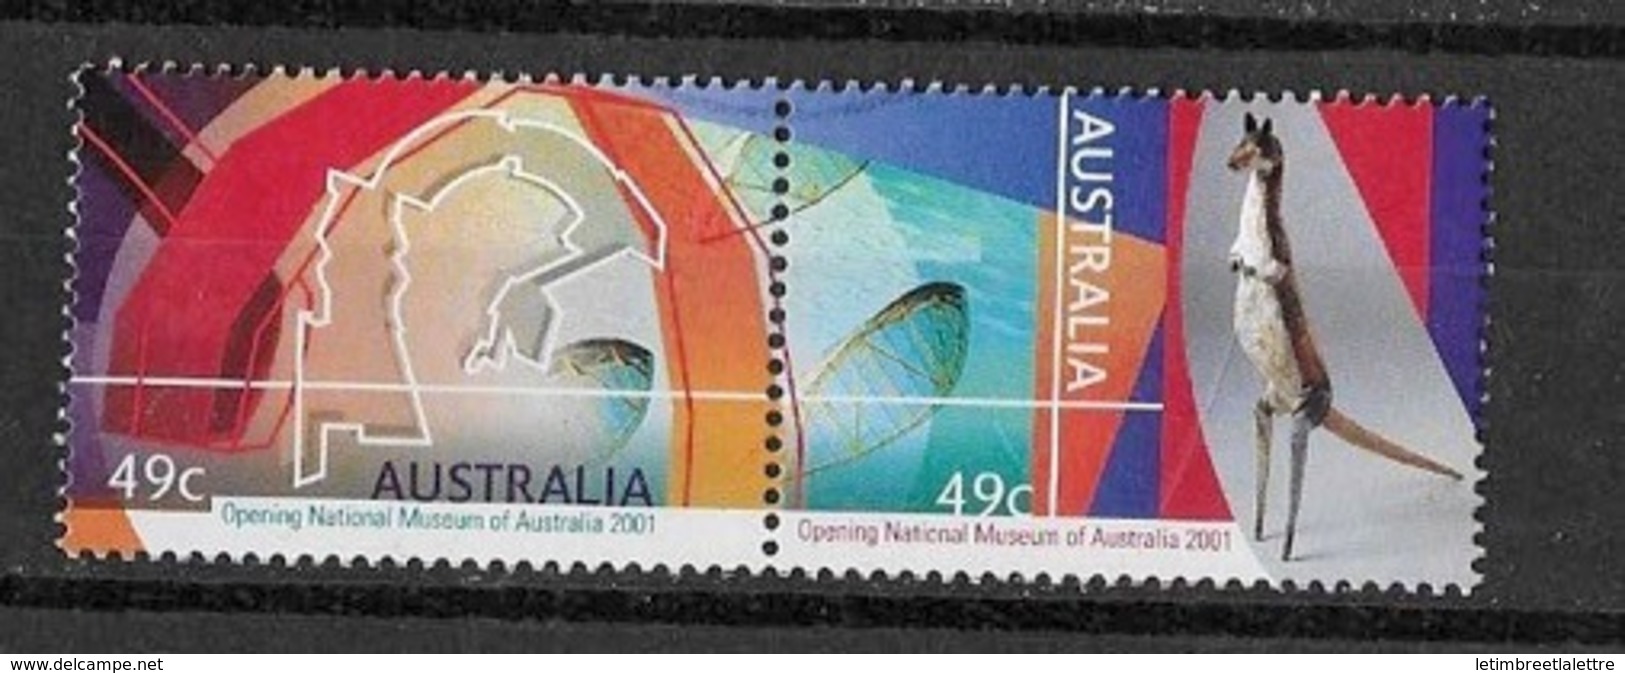 Australie N1917-1918** - Mint Stamps